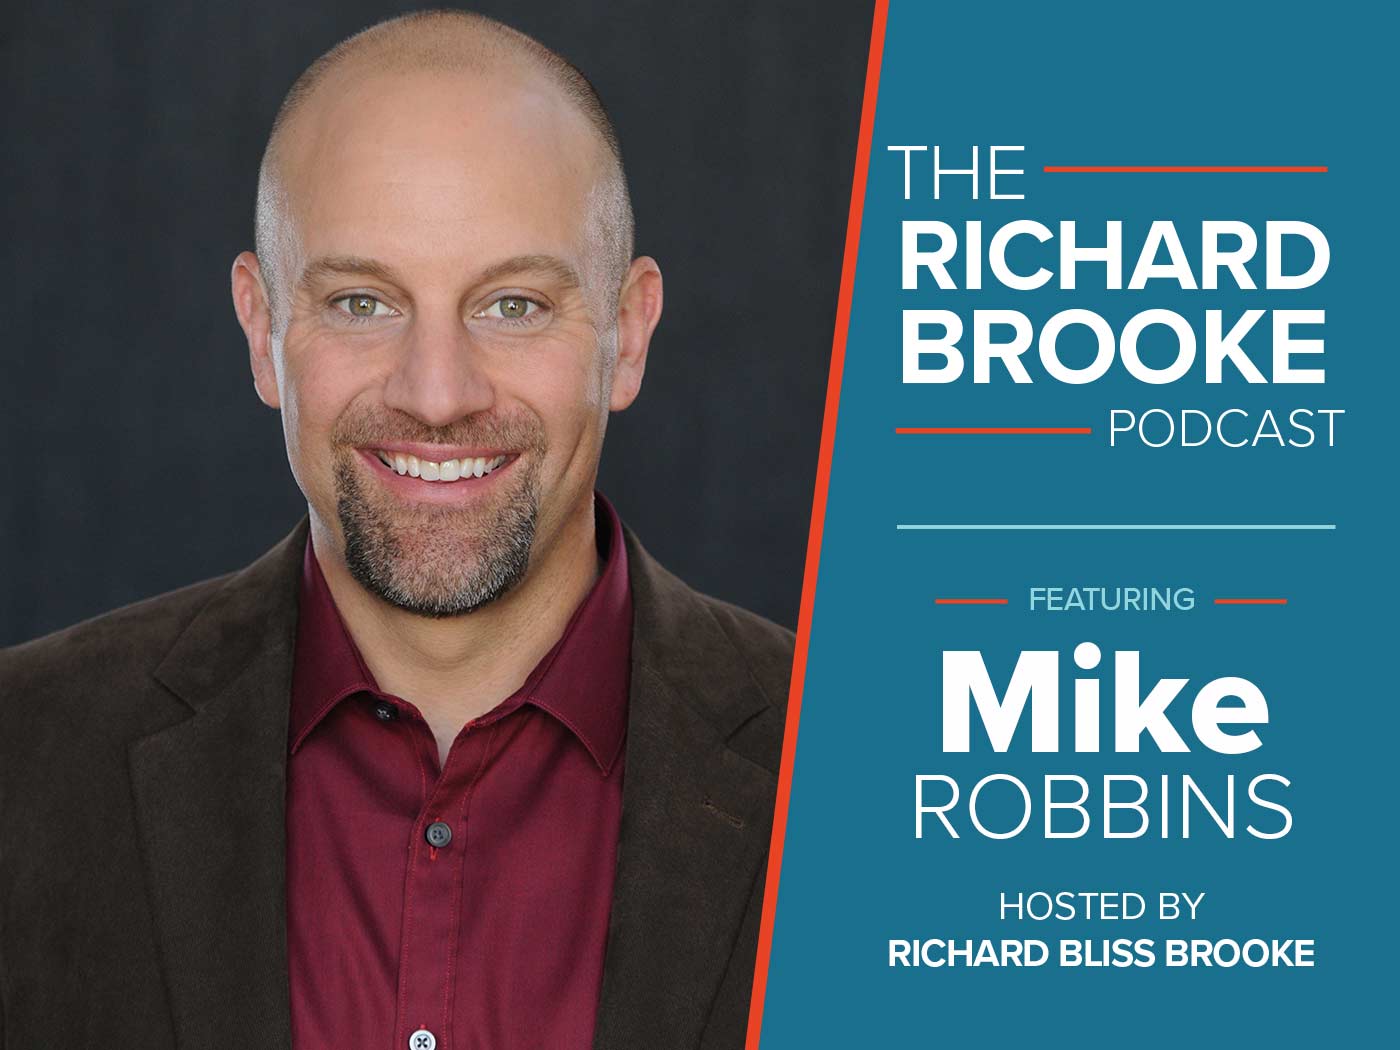 Mike Robbins - Former Professional Baseball Player